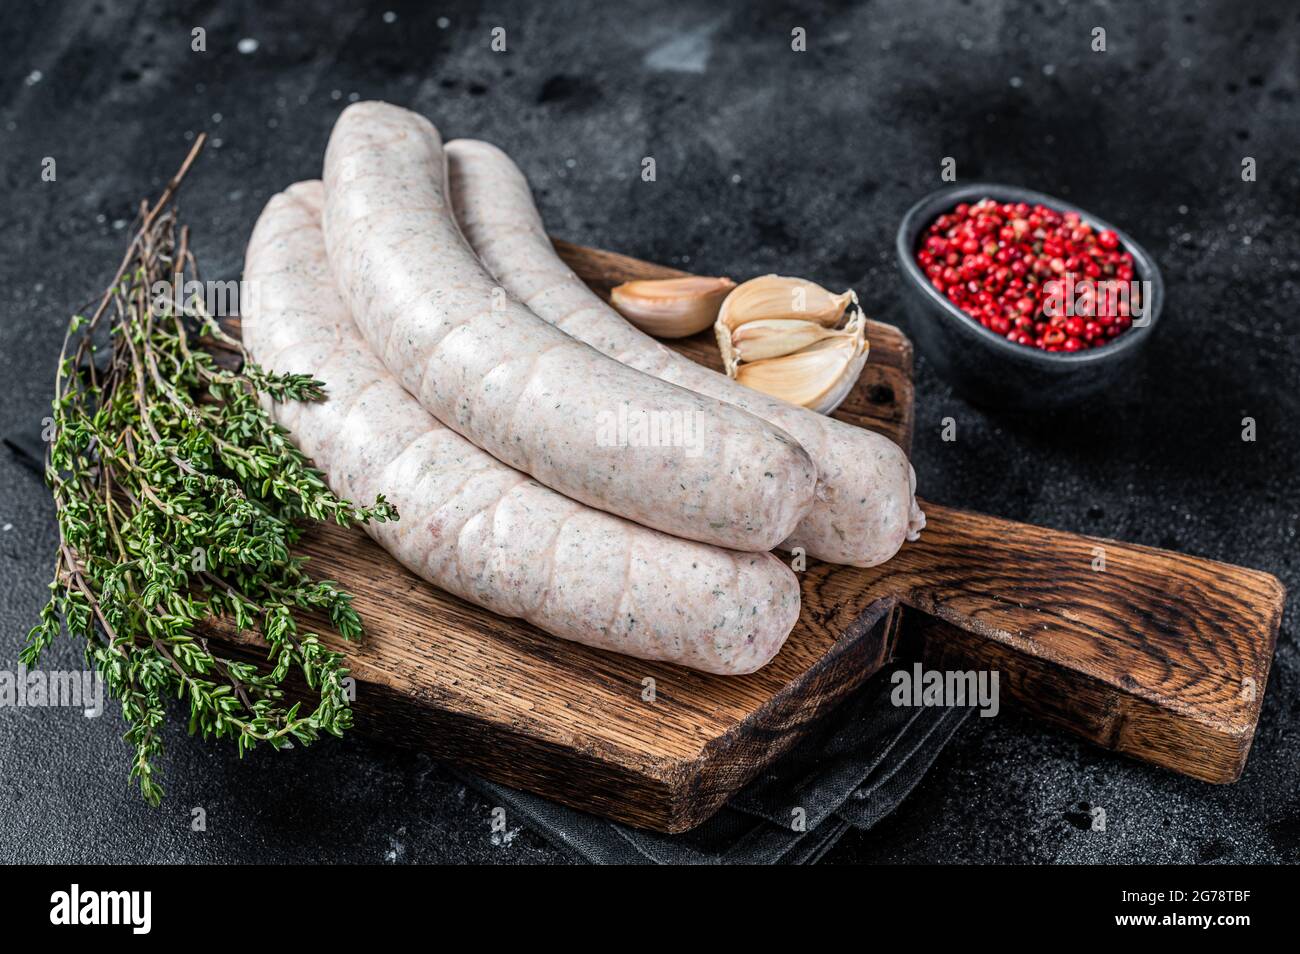 Raw Munich white sausage weisswurst on wooden board. Black background. Top view Stock Photo